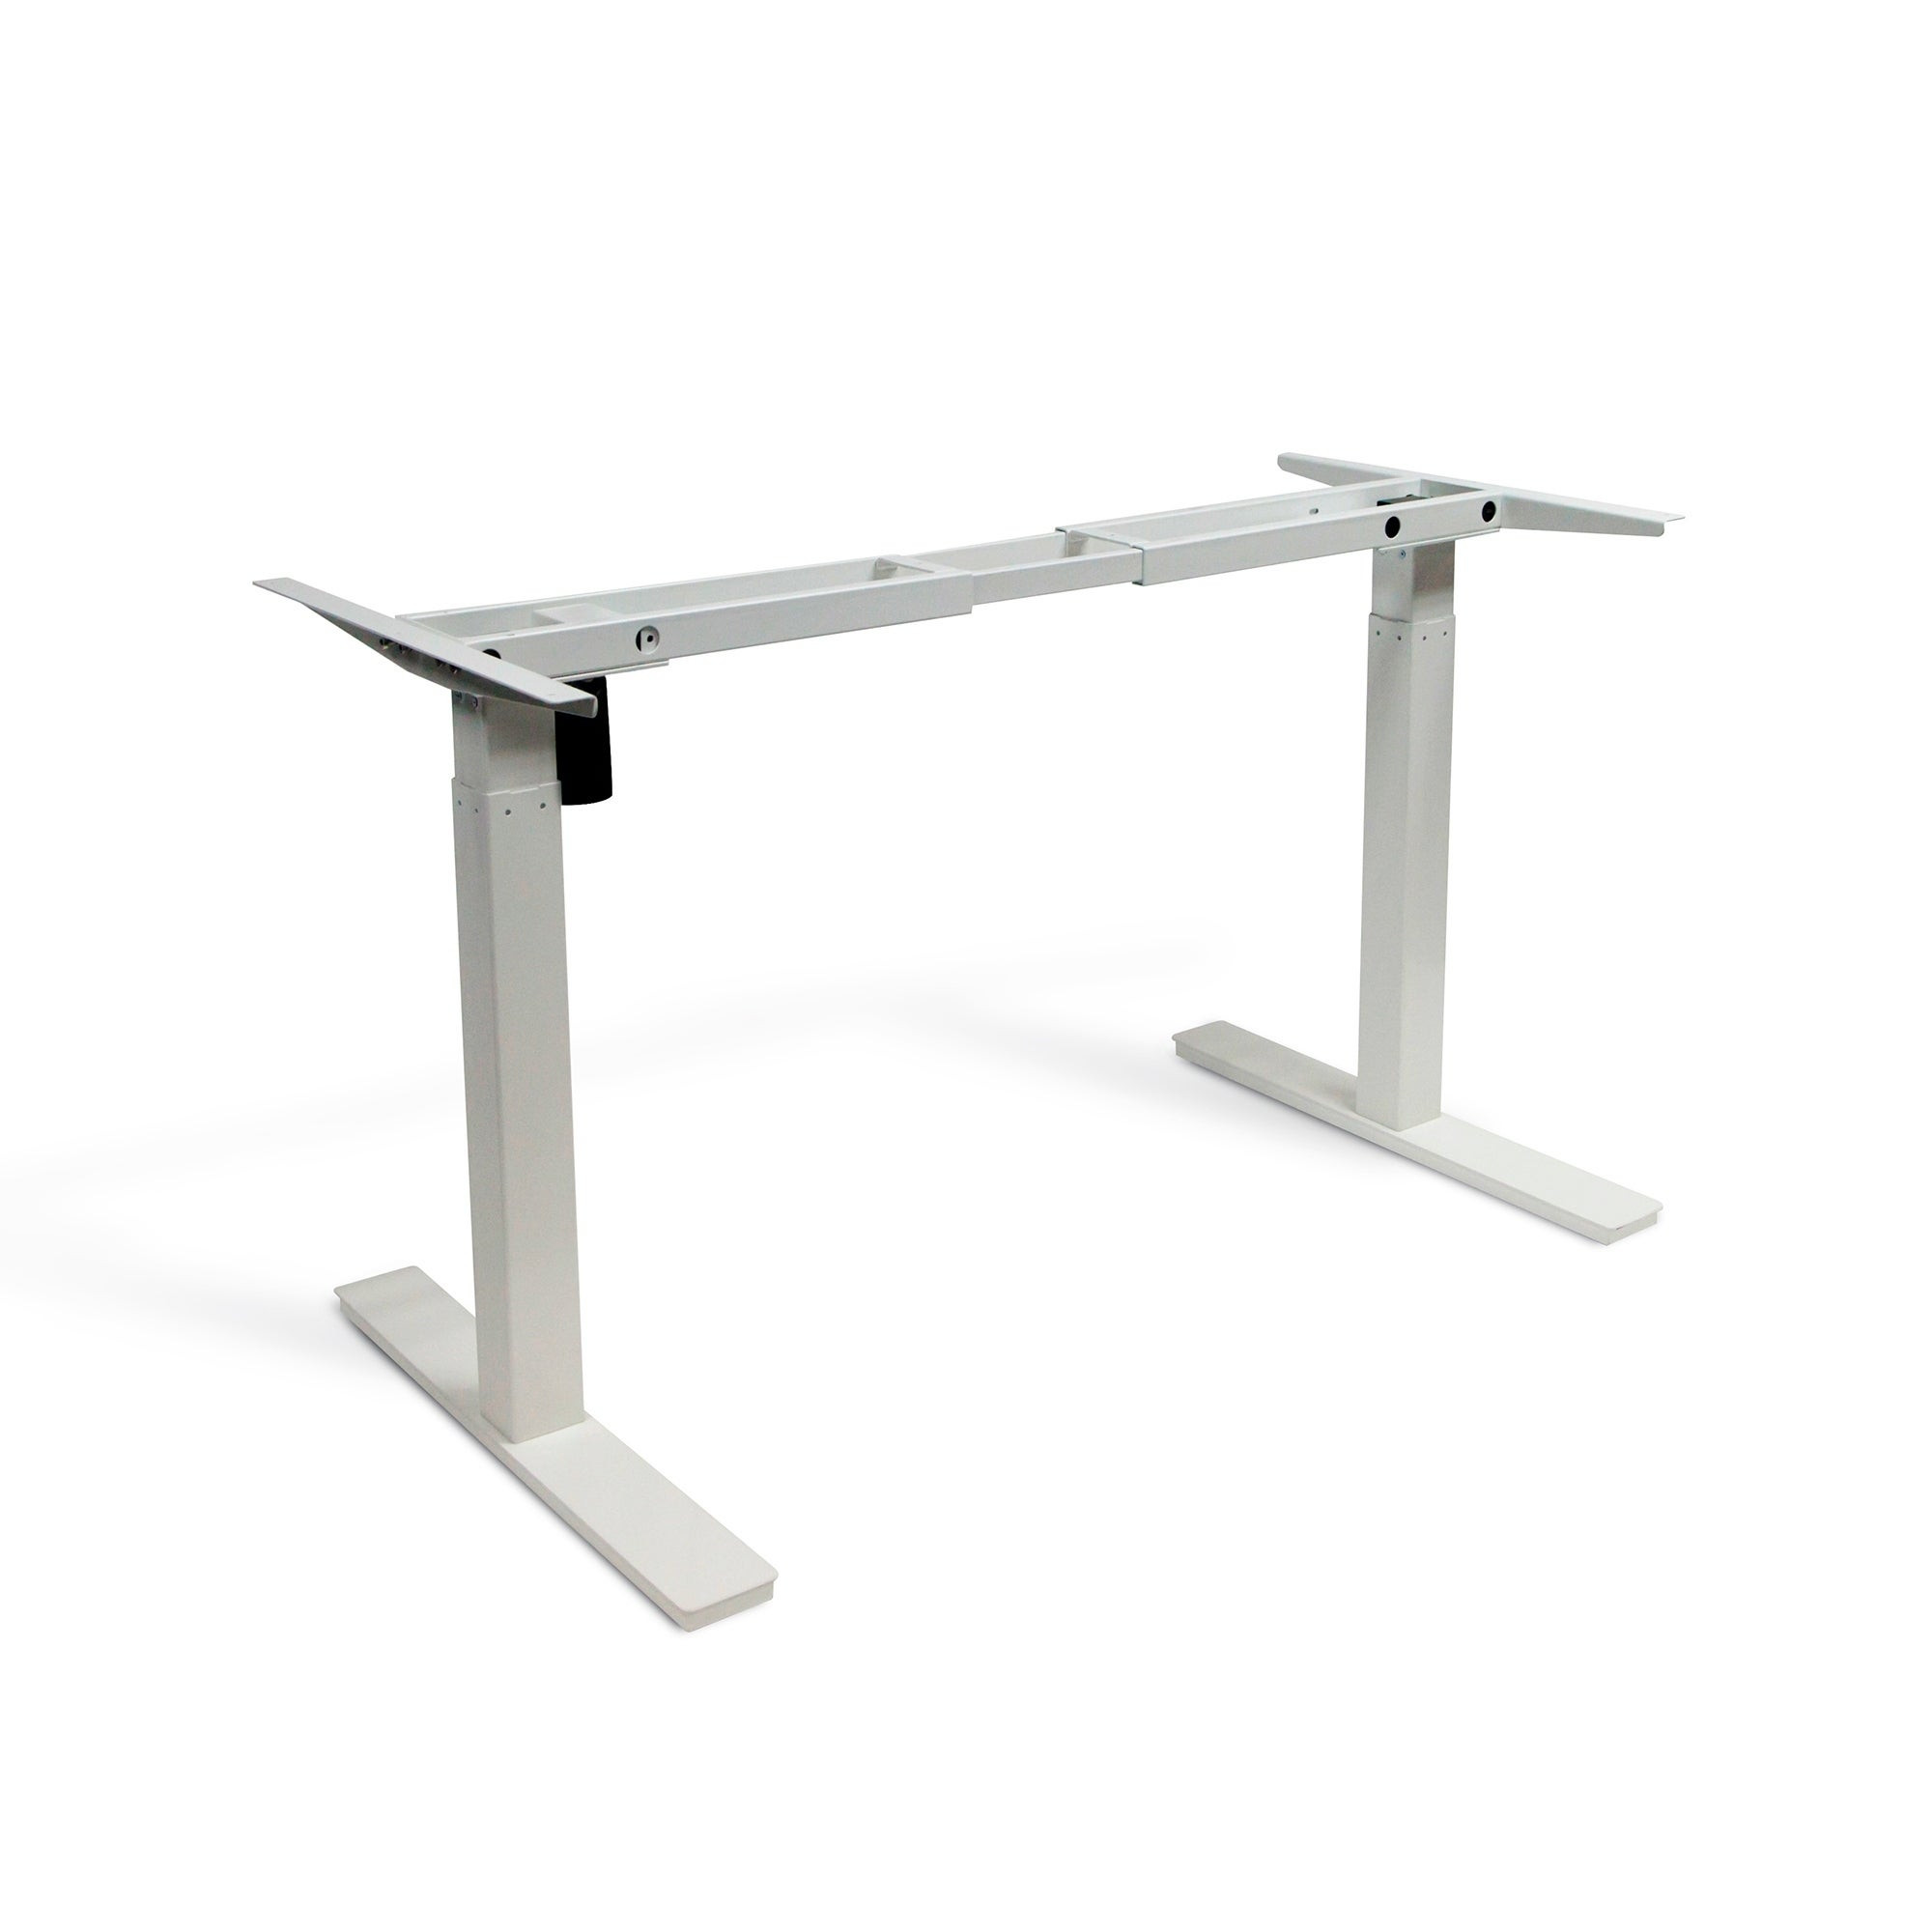 Best ideas about DIY Standing Desk Adjustable
. Save or Pin Autonomous SmartDesk Height Adjustable Standing Desk Now.